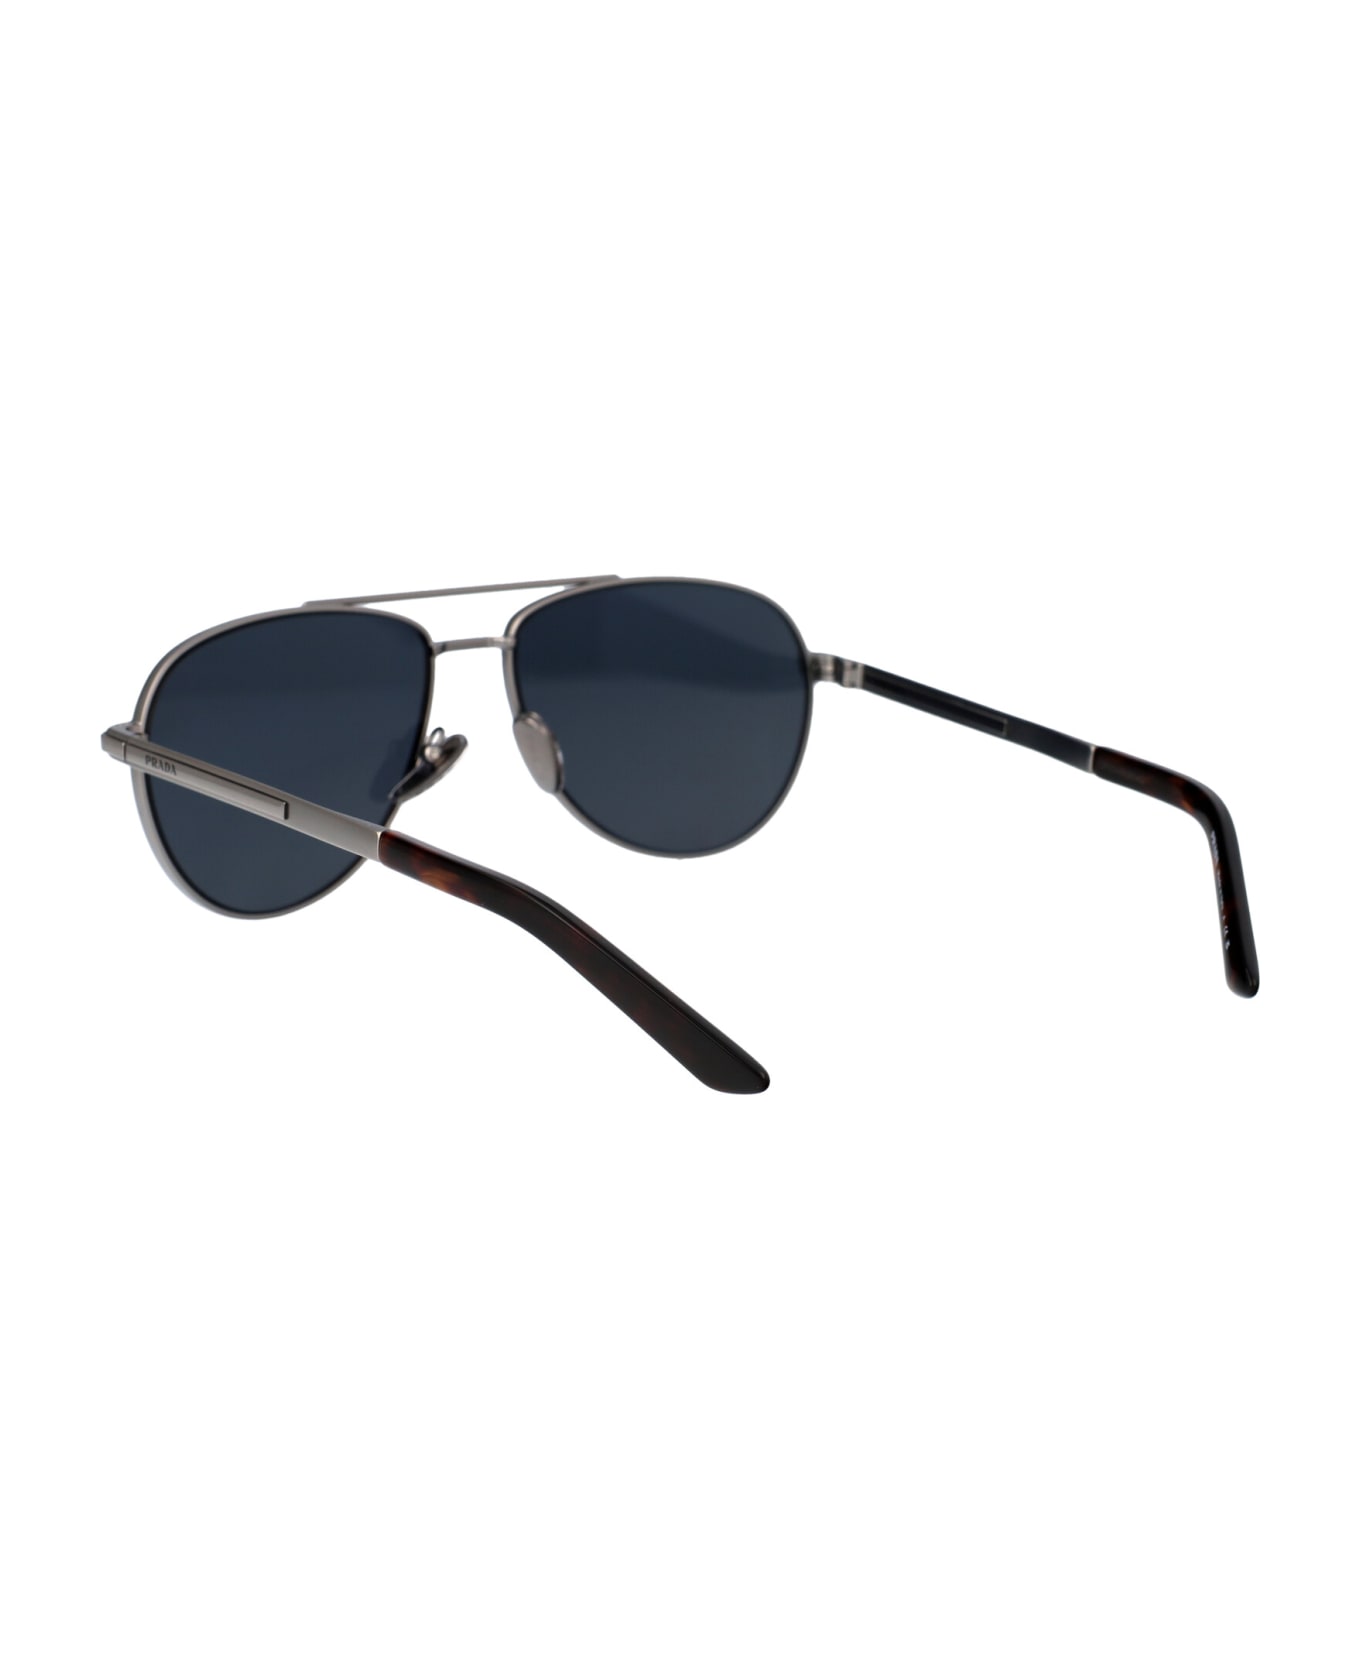 Prada Eyewear 0pr A54s Sunglasses - 7CQ09T Matte Gunmetal